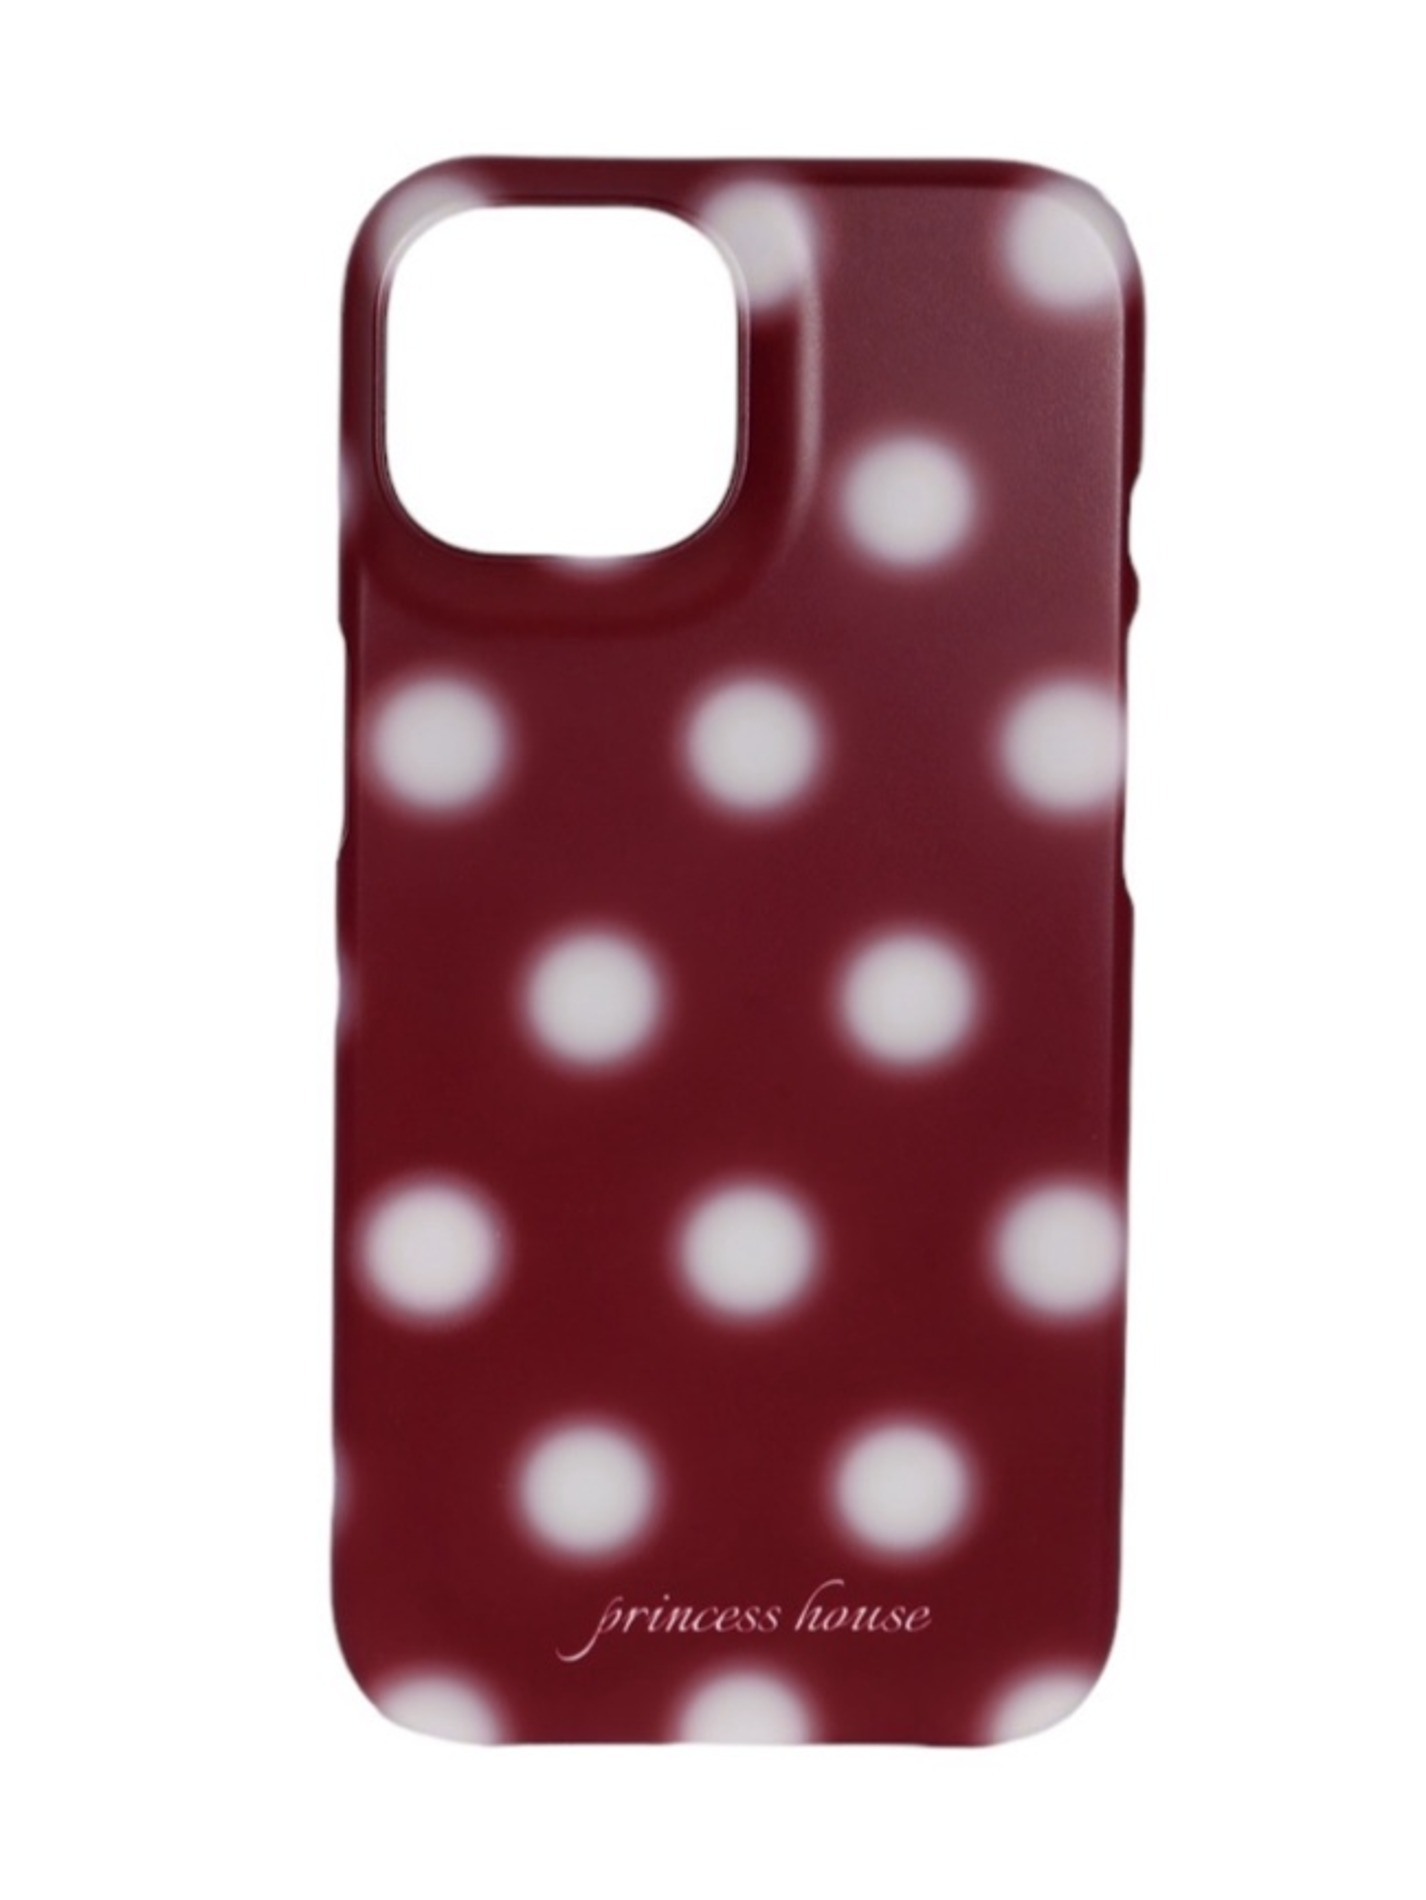 red snow phone case - hard